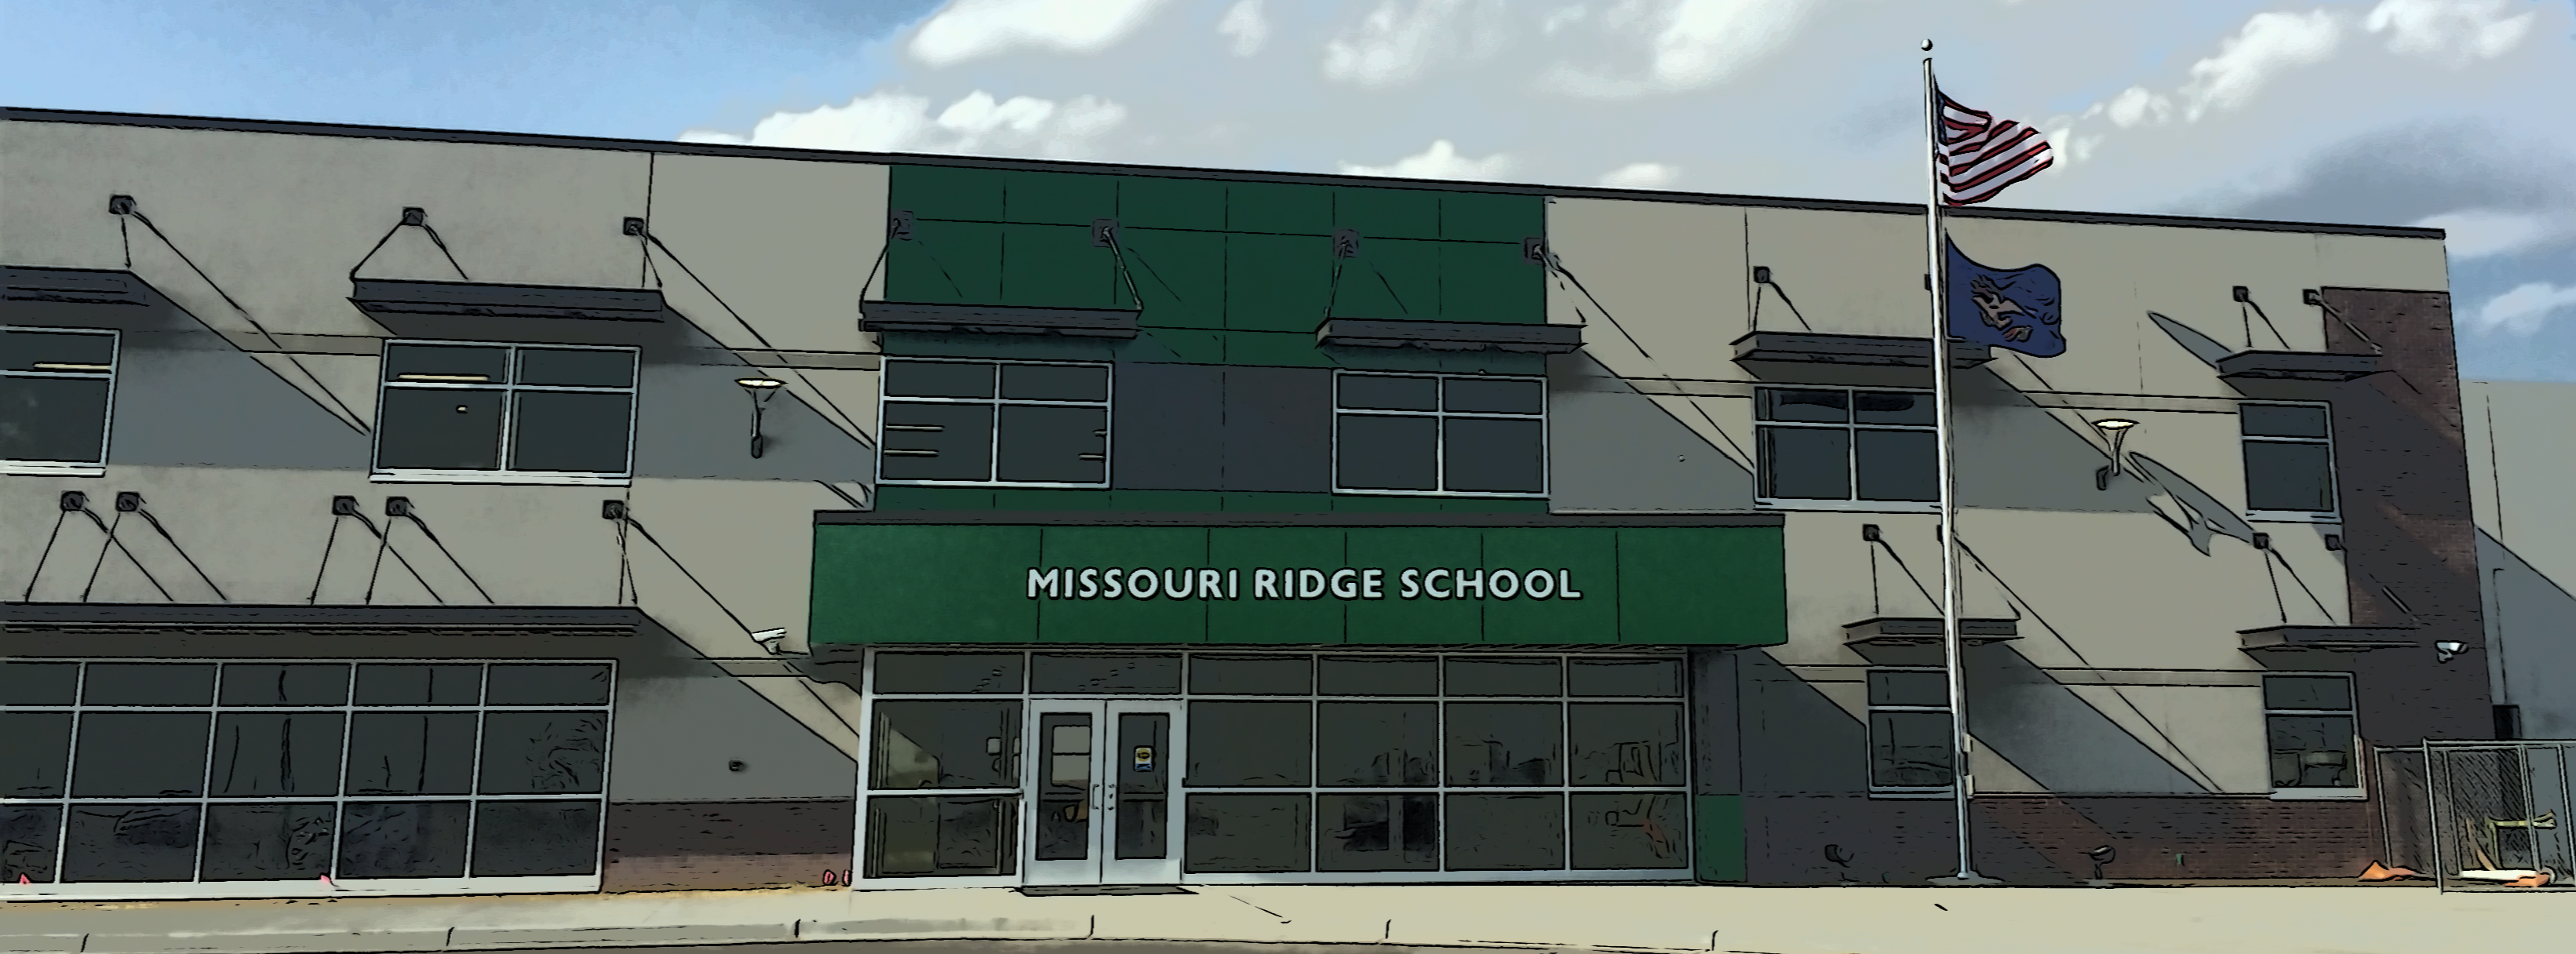 Missouri RIdge school building entrance